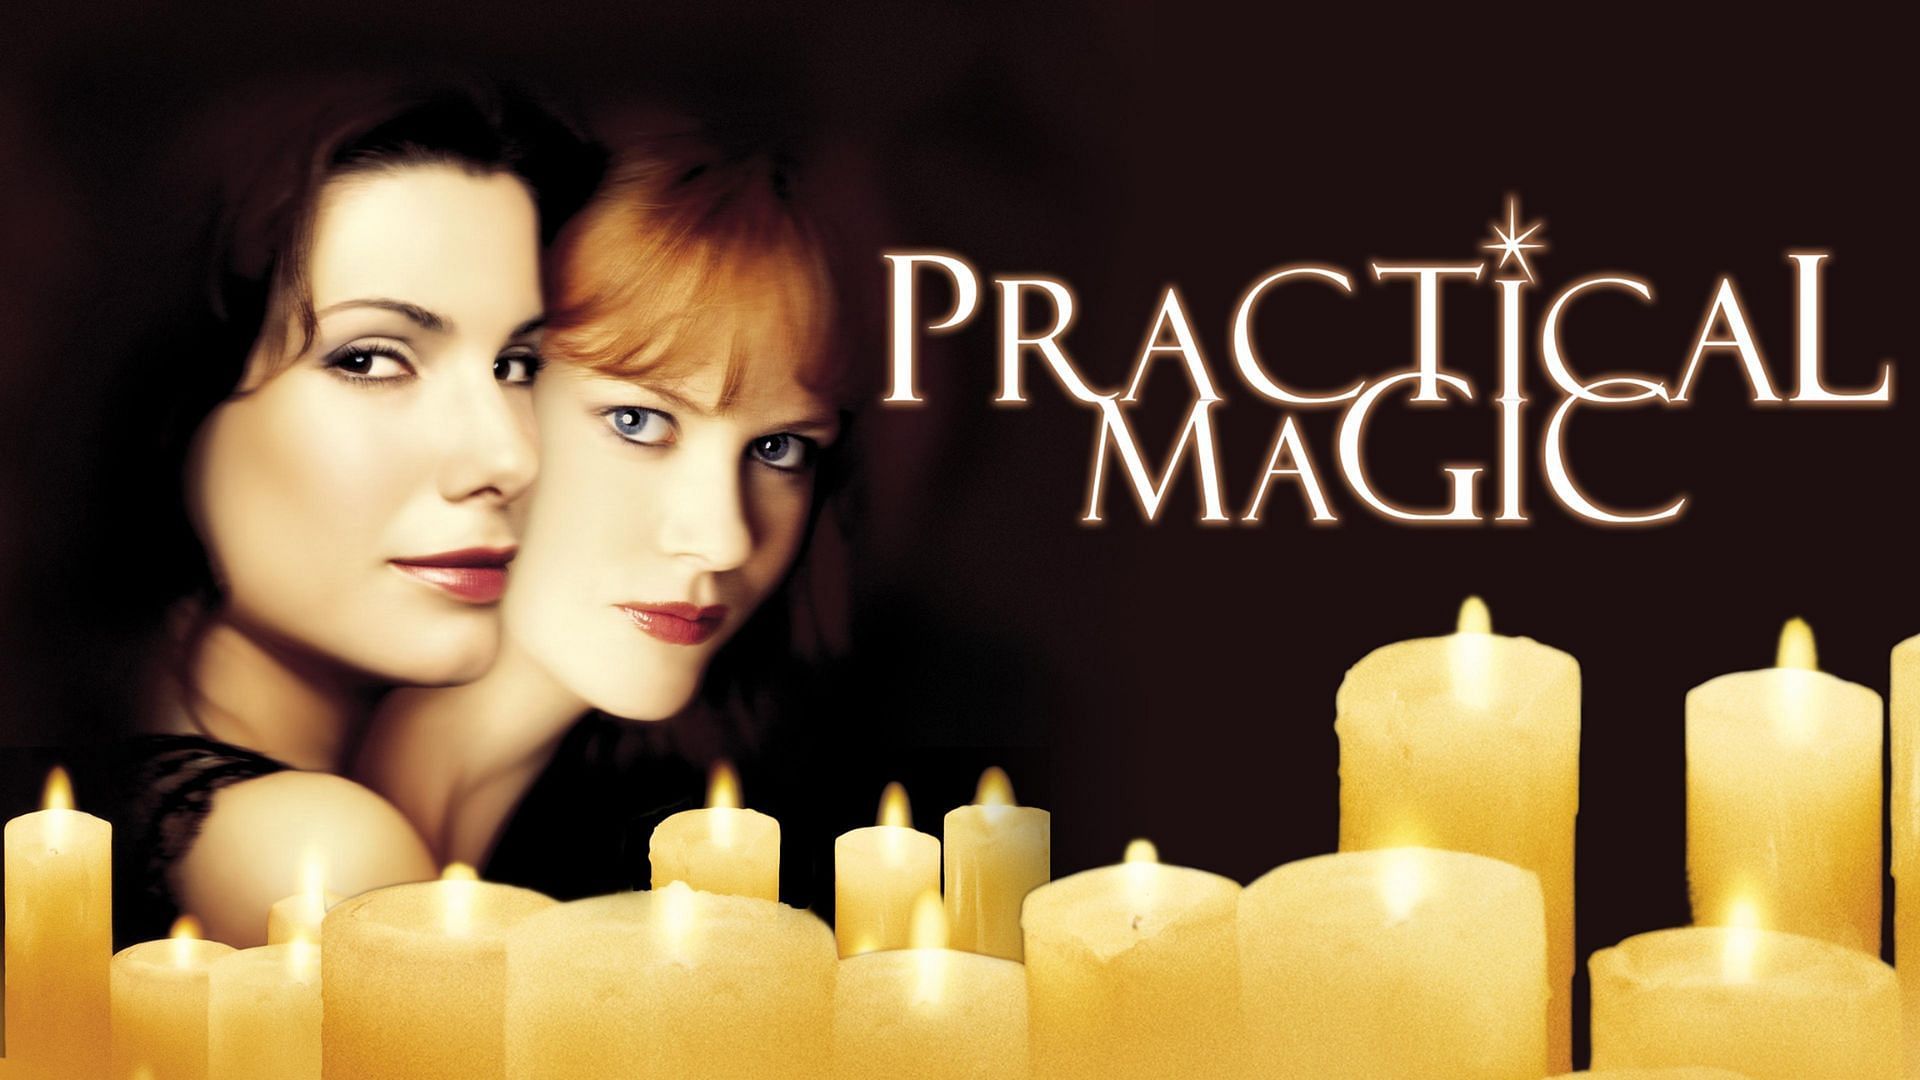 Practical Magic, 1998 (Image via Prime Video)